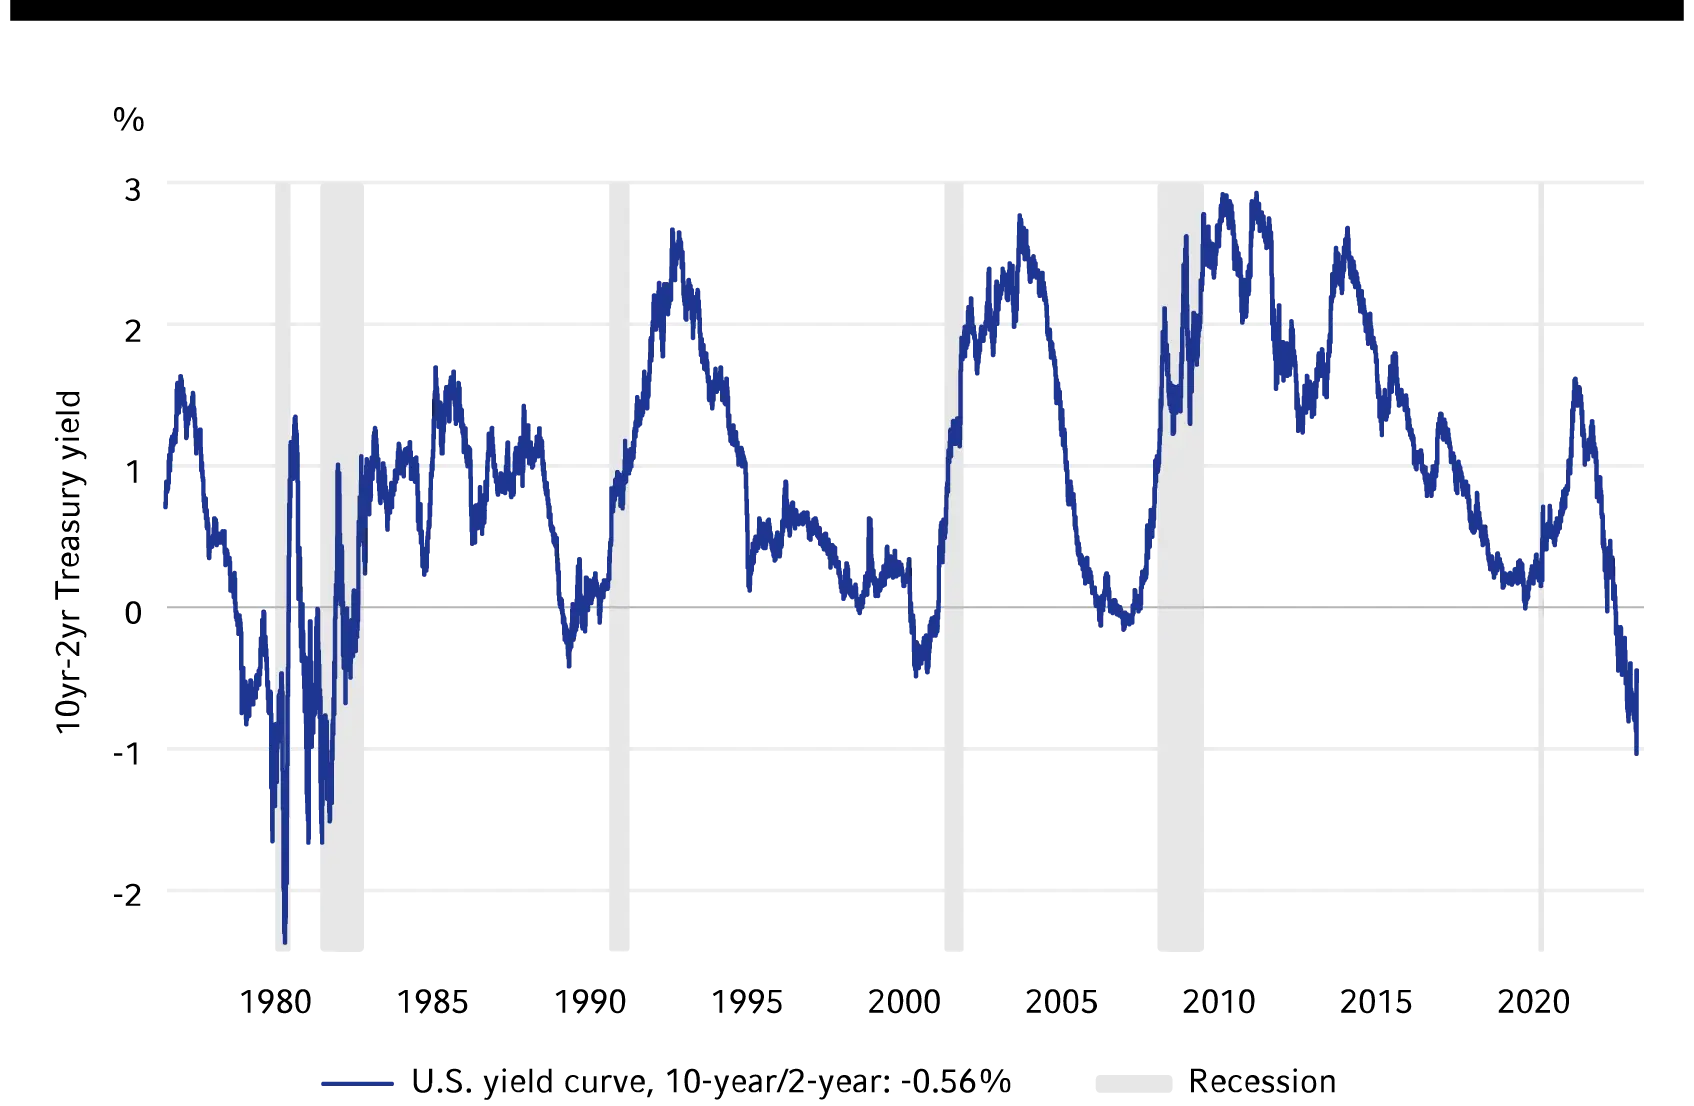 Inverted U.S. yield curve signals recession risk